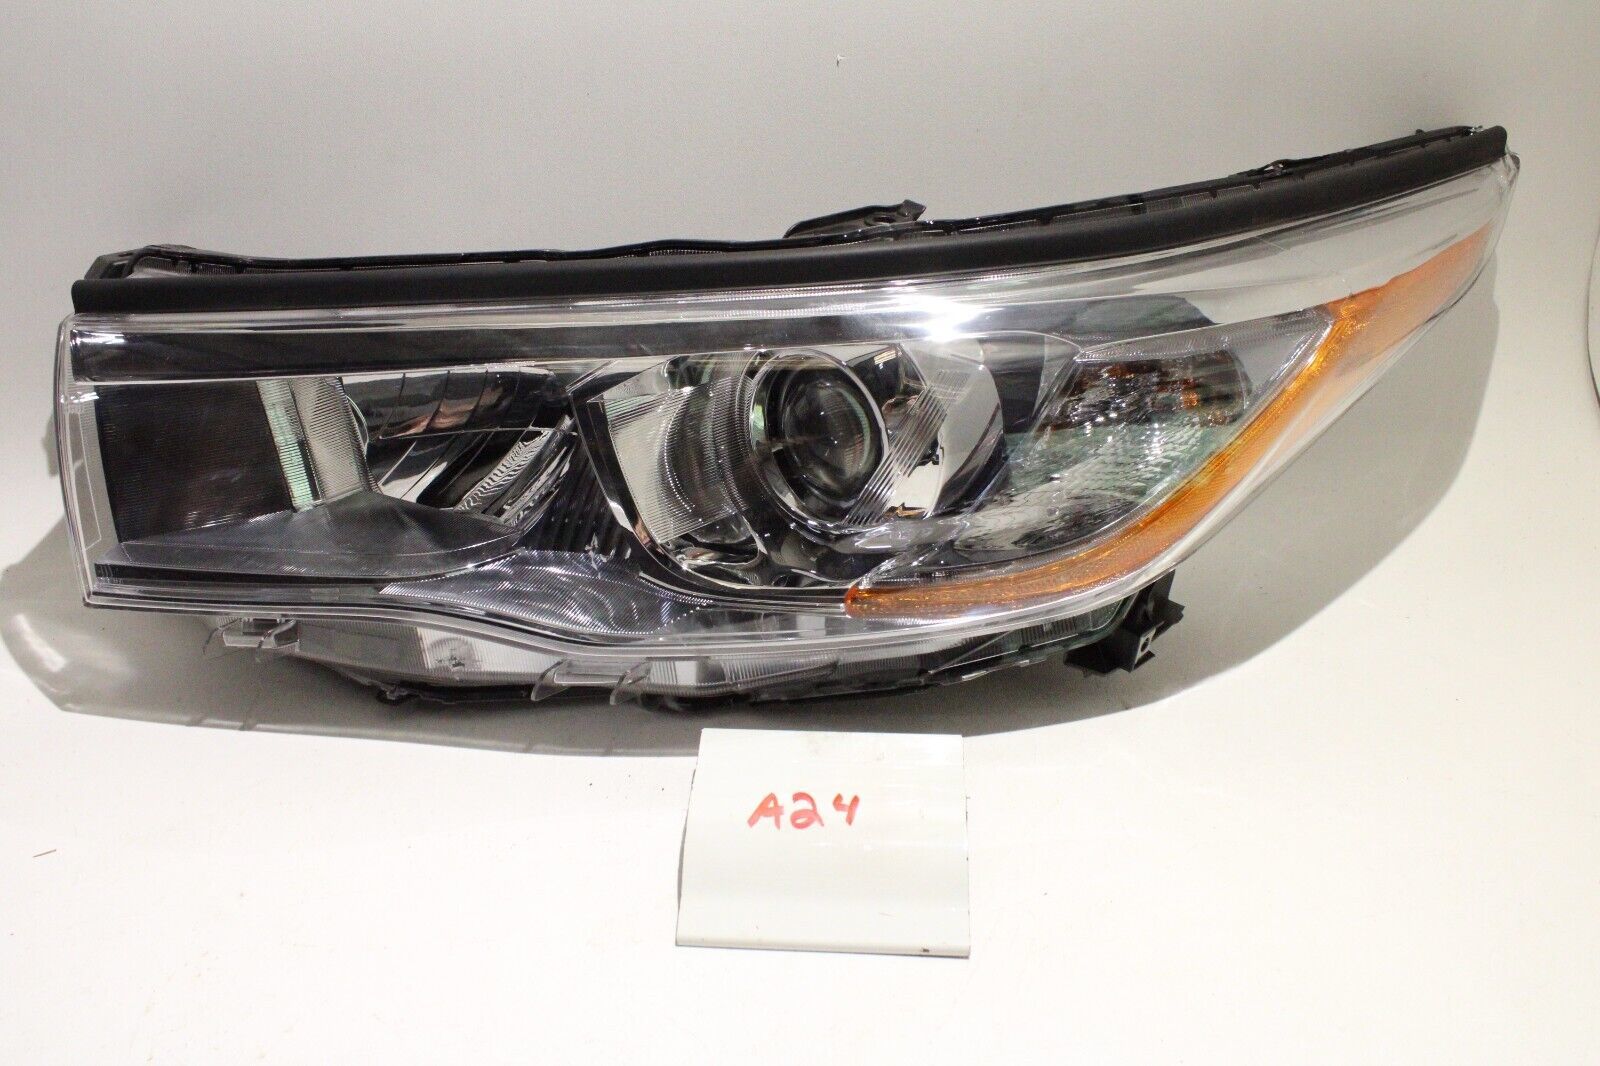 Primary image for Used OEM Headlight Head Lamp Toyota Highlander 2014-2016 damaged mounts Limited